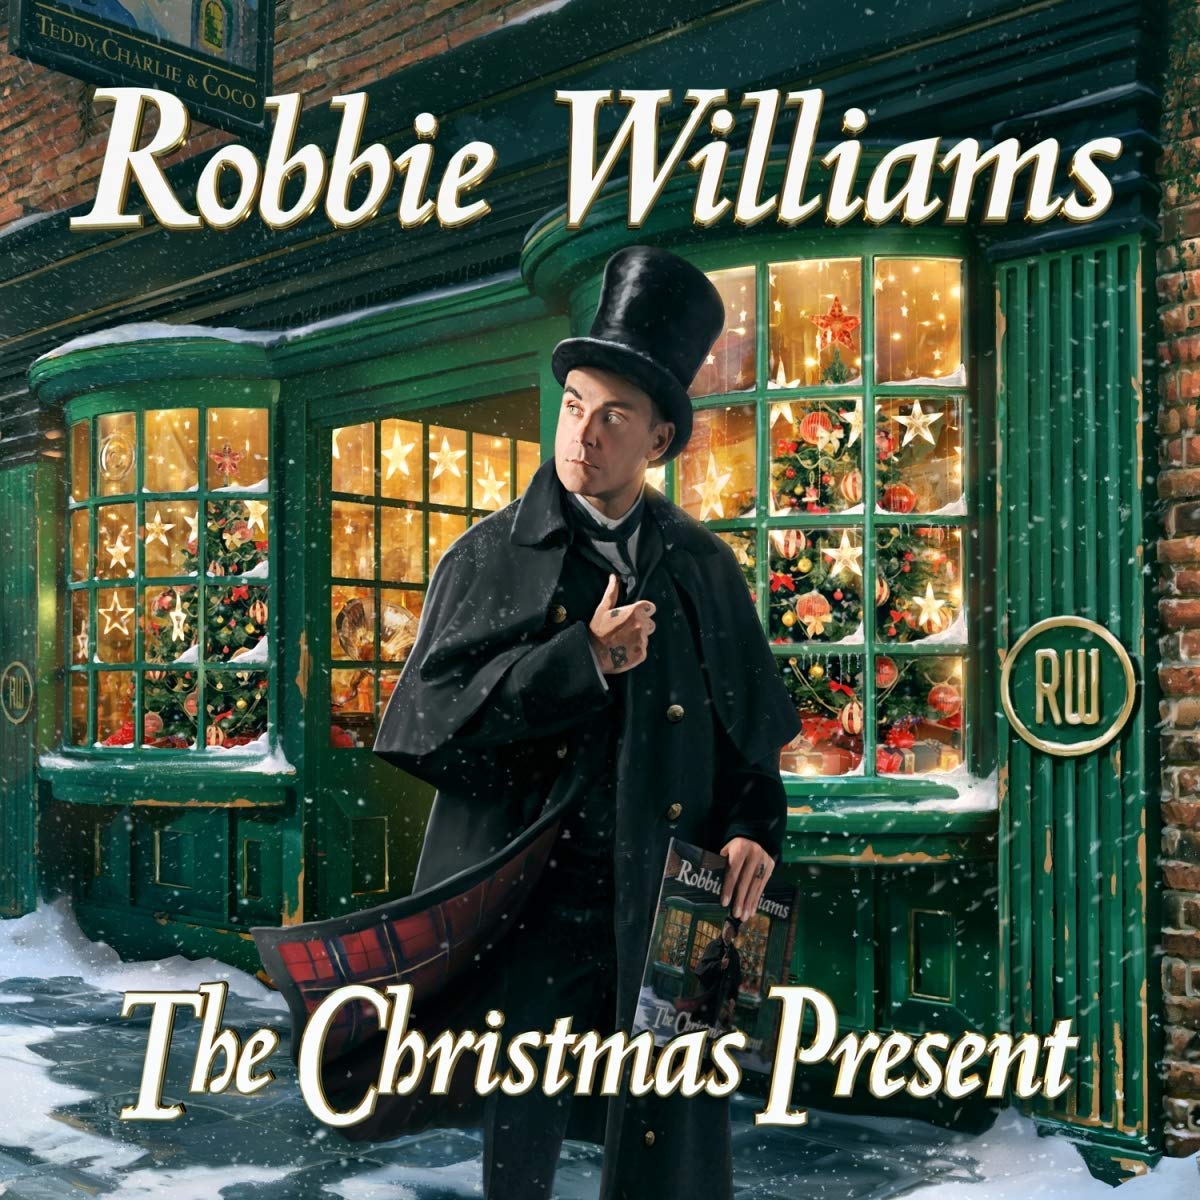 Robbie Williams The Christmas Present album 2019 cover